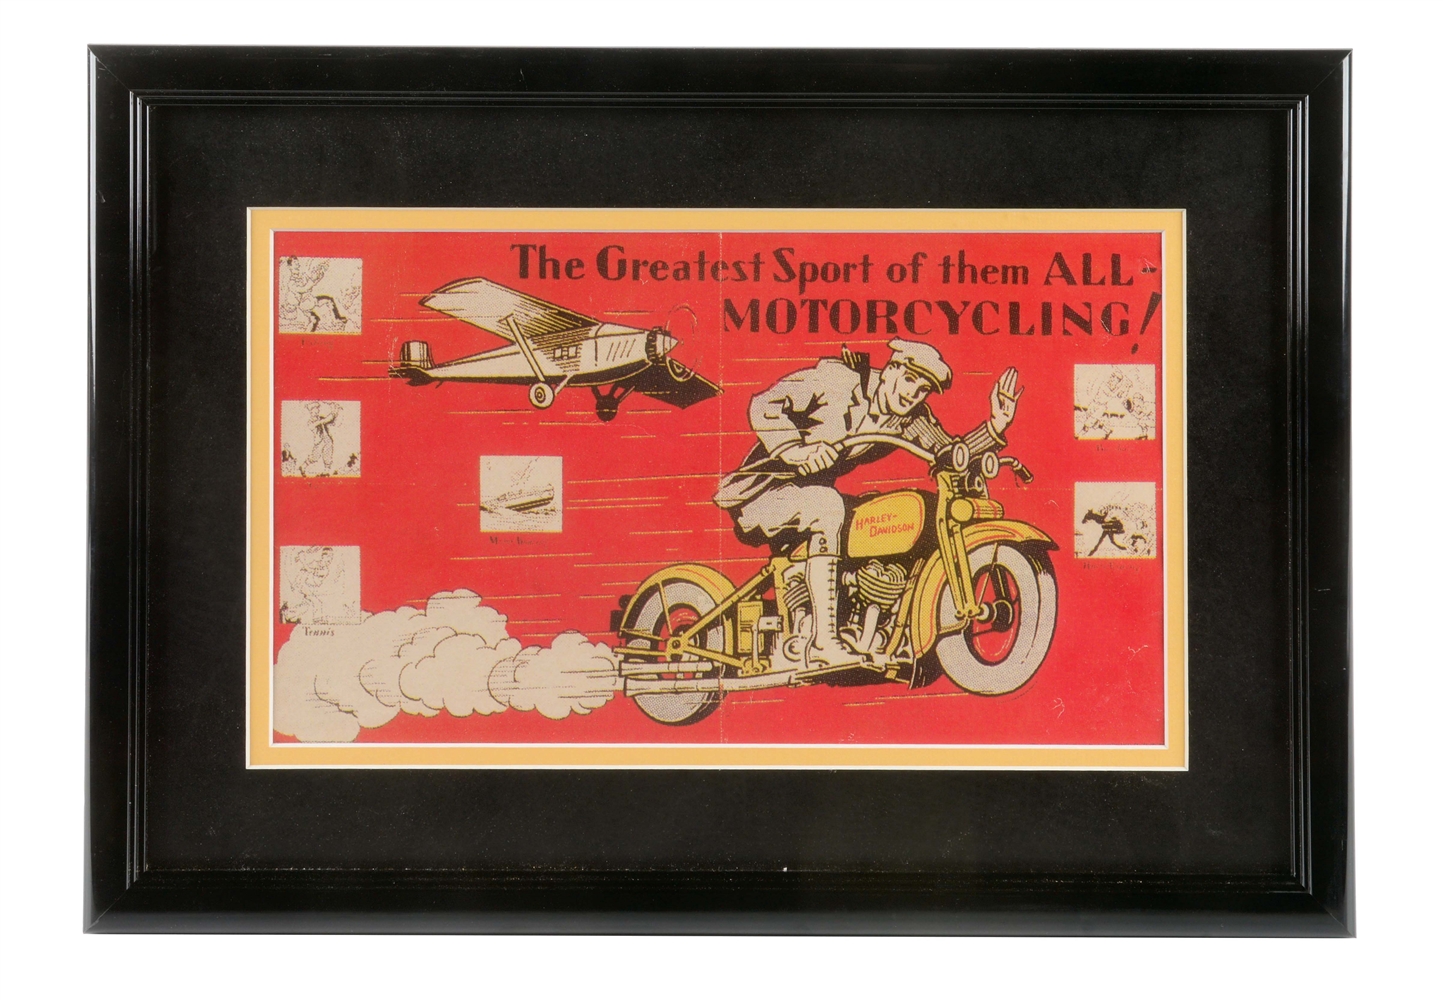 HARLEY DAVIDSON MOTORCYCLES "GREATEST SPORT OF THEM ALL" FRAMED ADVERTISEMENT. 